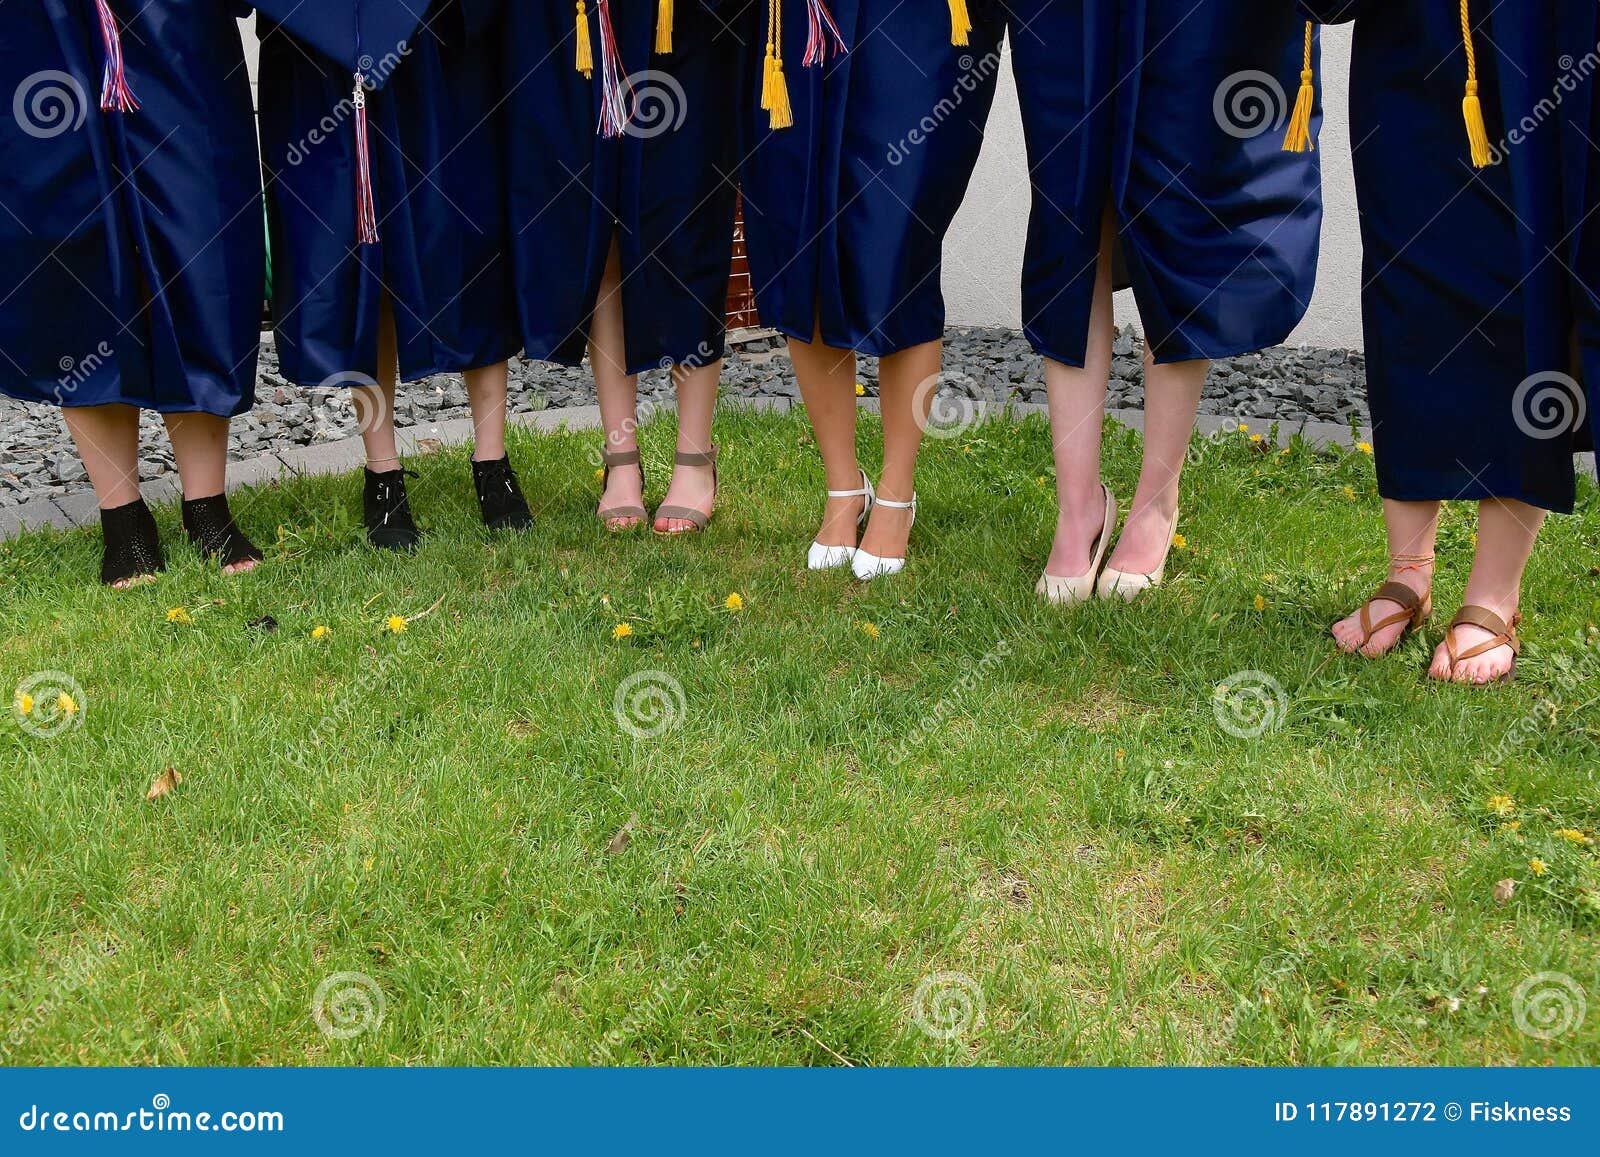 High School Graduation Shoes